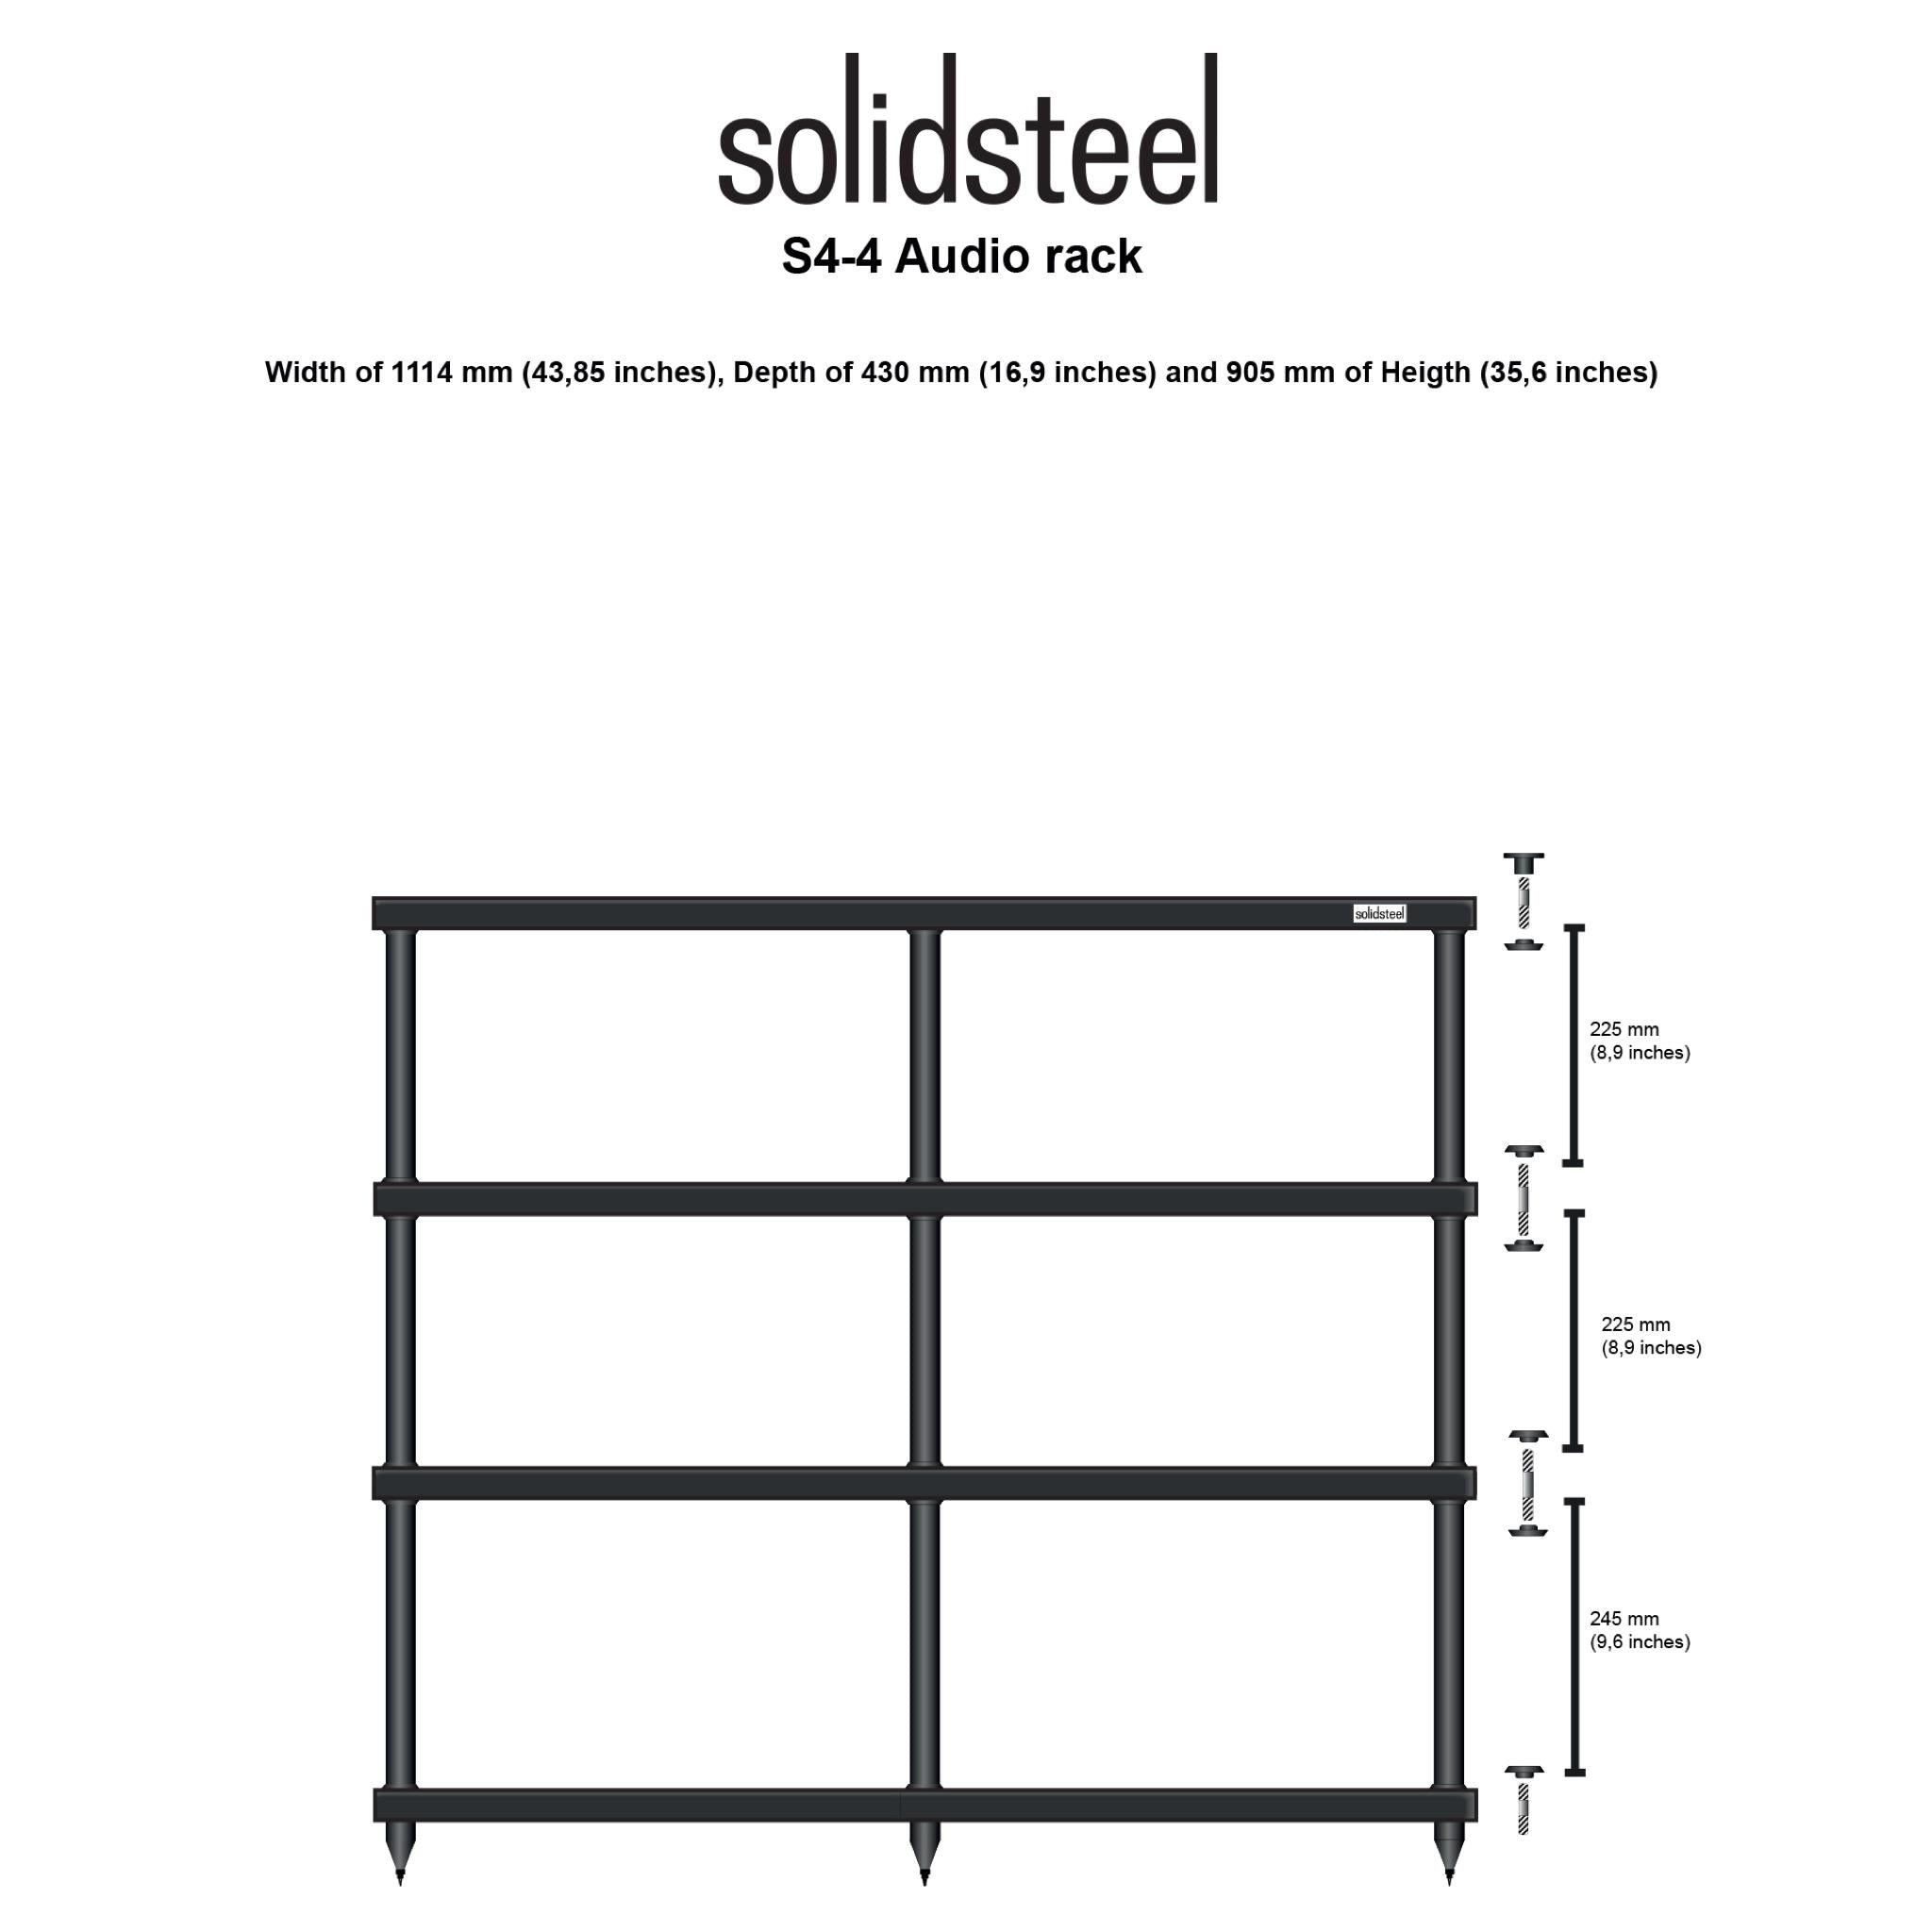 Solidsteel S4 Series - HiFi Audio and TV Rack - AVStore